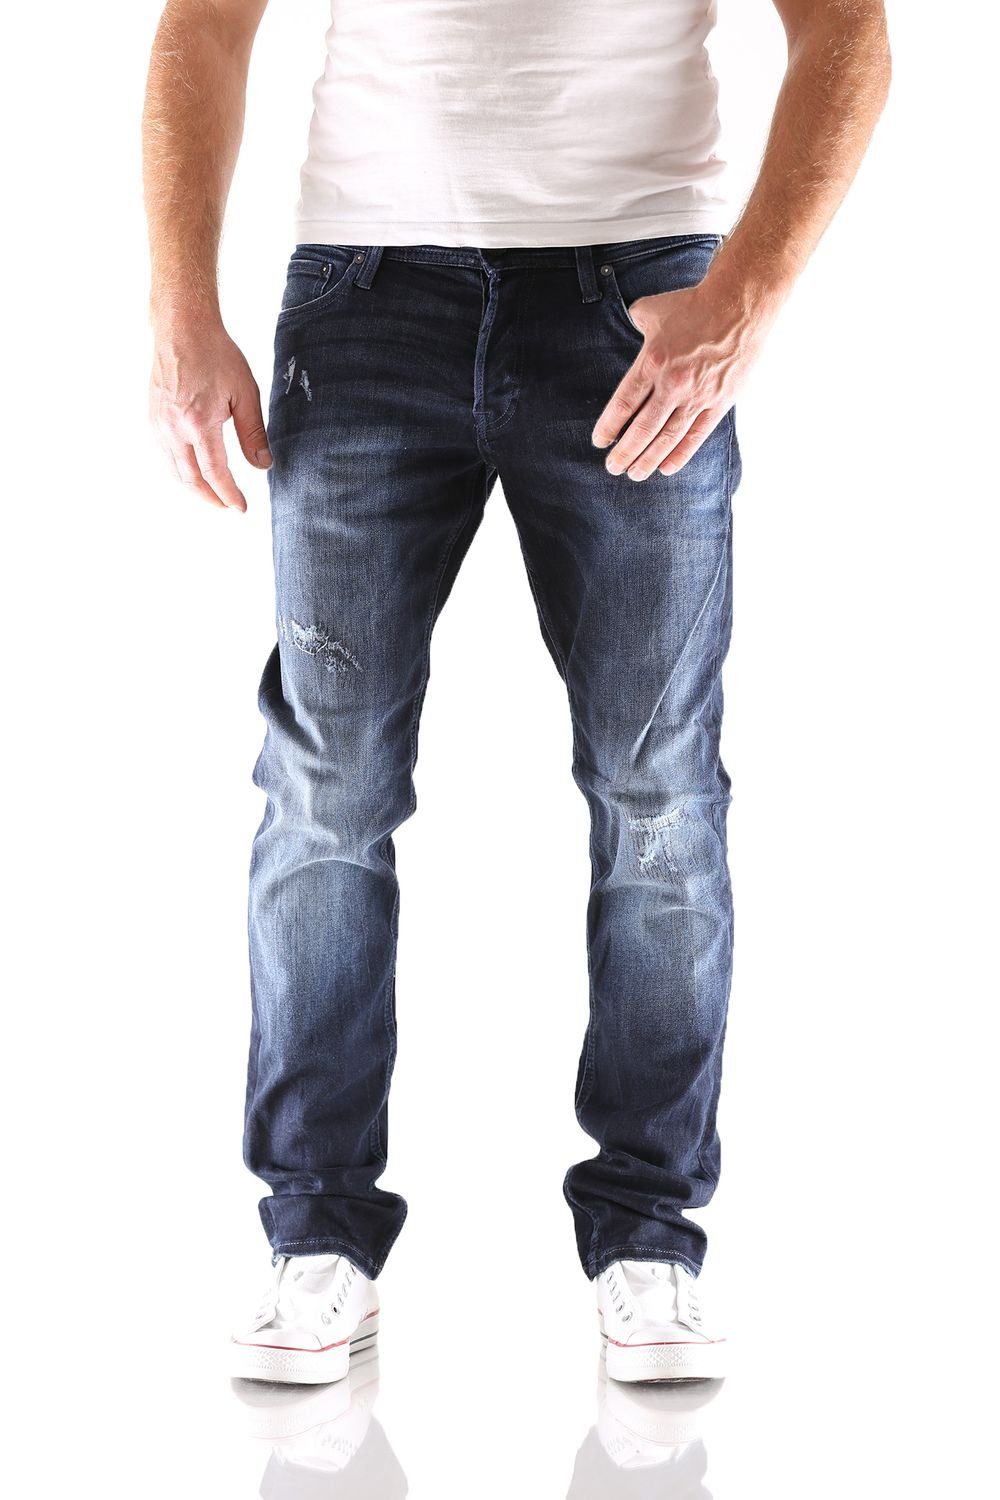 Jack & Jones Slim-fit-Jeans Jack & Jones Glenn Original GE 149 Slim Fit Herren Jeans Hose